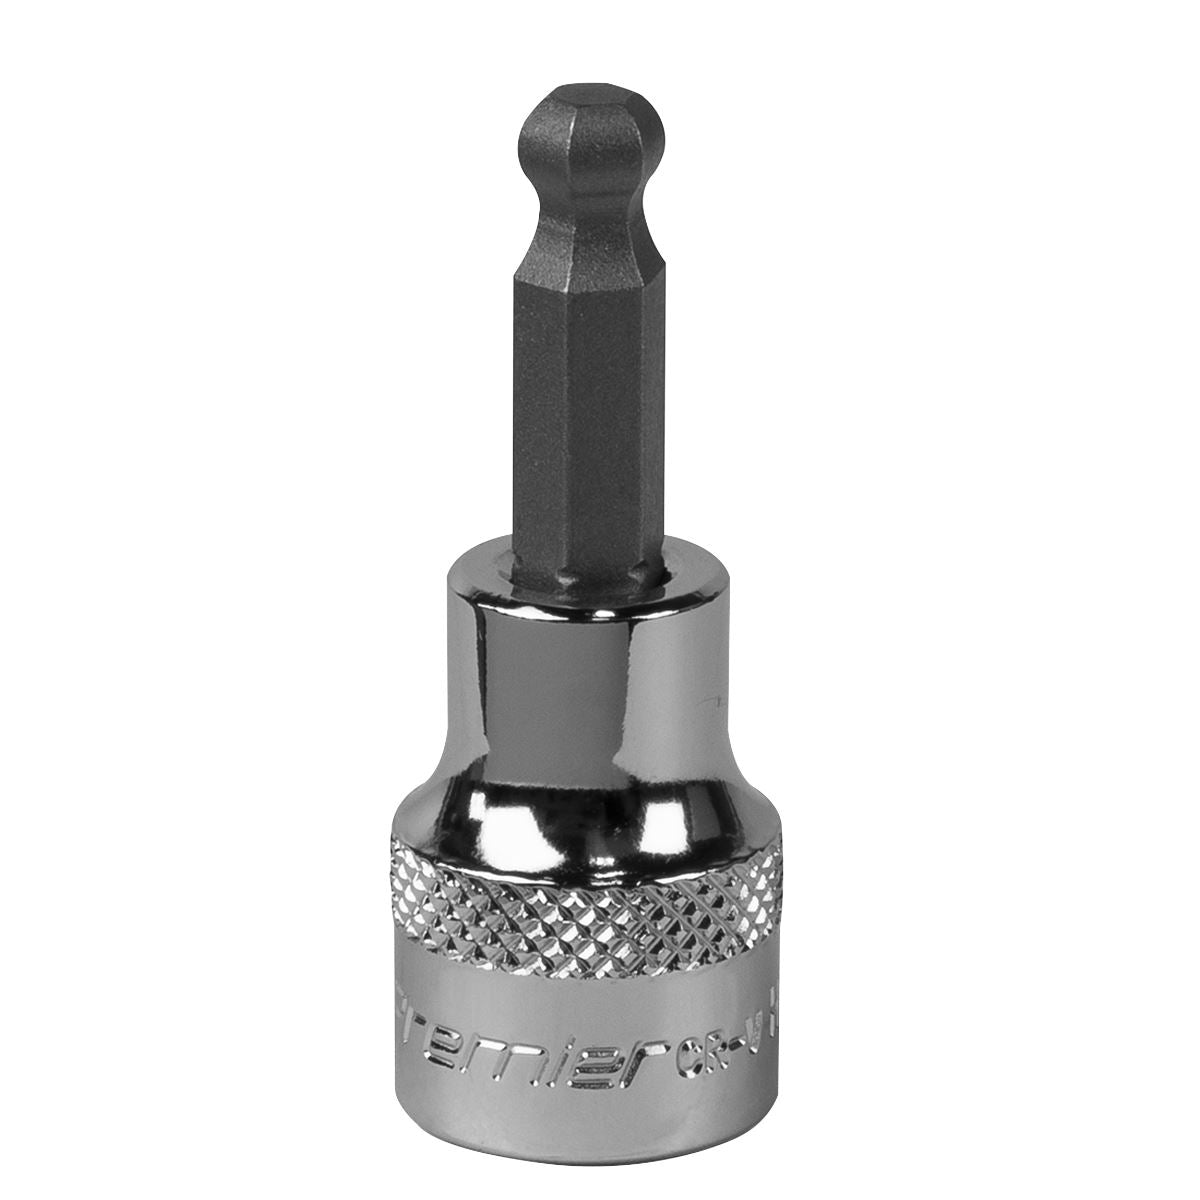 Sealey Premier Ball-End Hex Socket Bit 6mm 3/8"Sq Drive